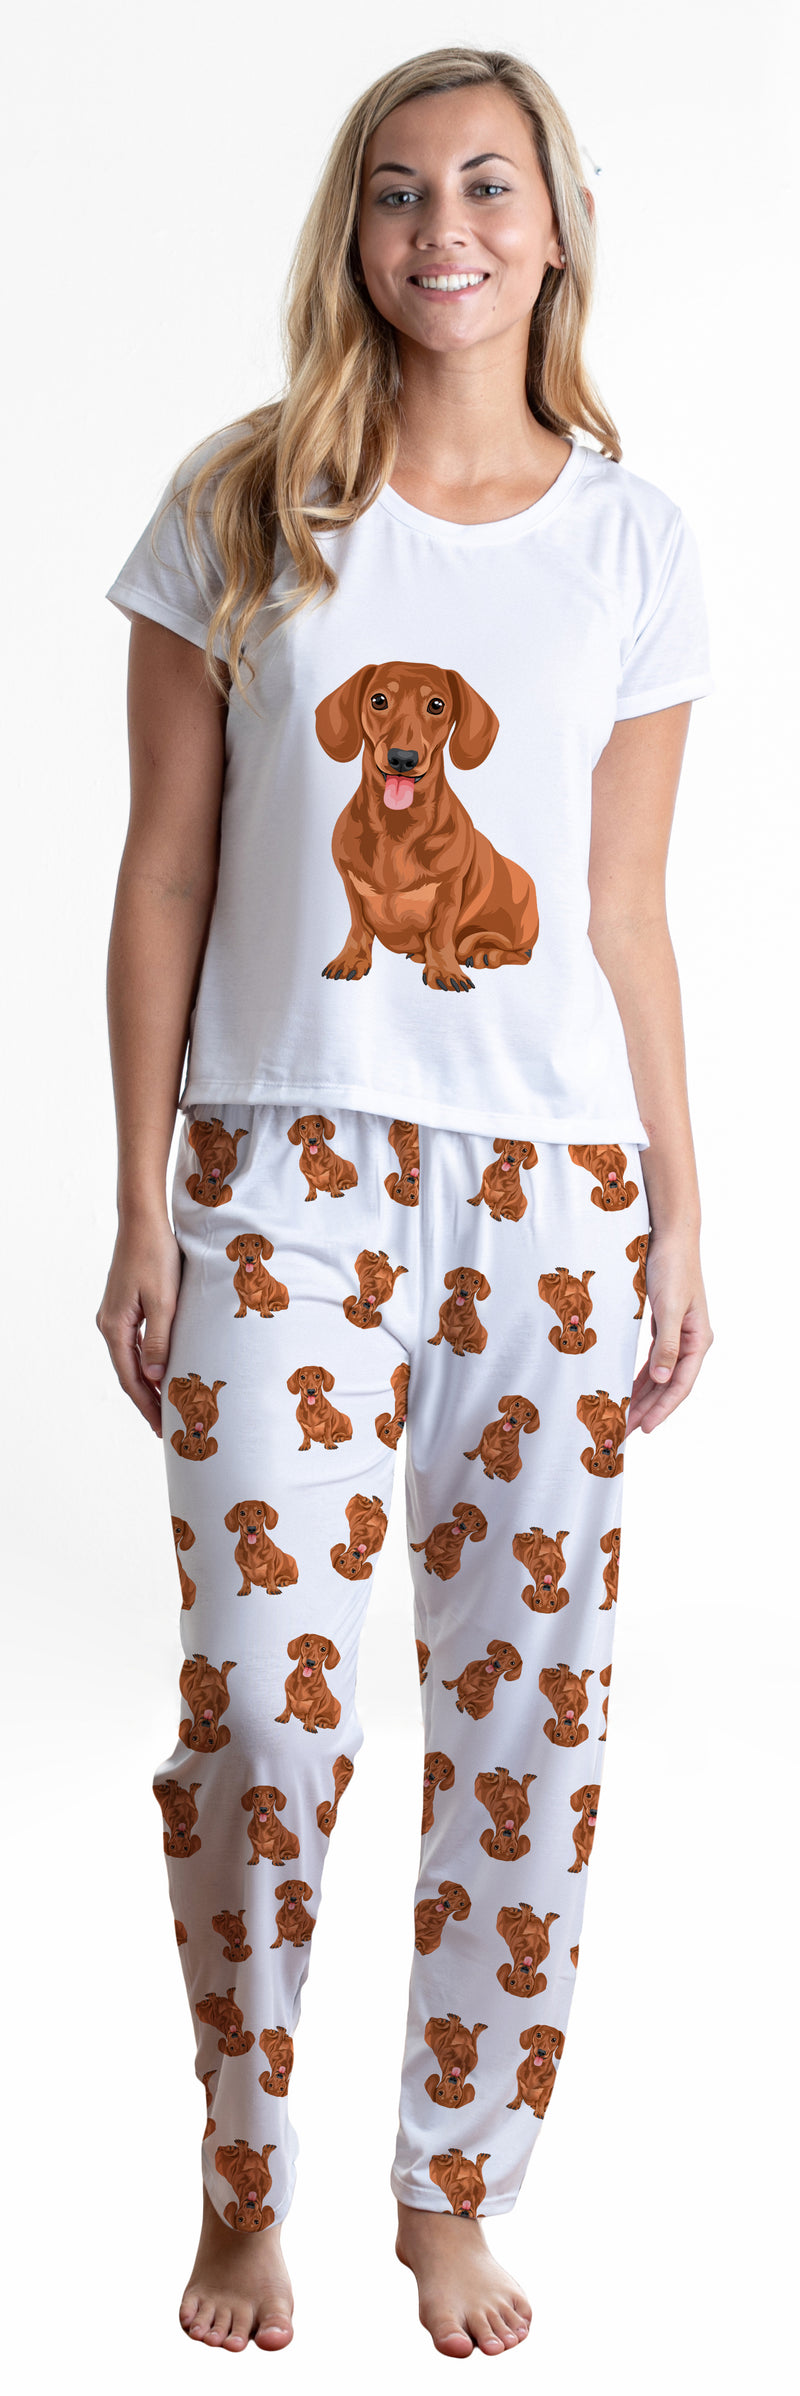 Red dachshund / Brown wiener dog 2 piece Pj set with pants